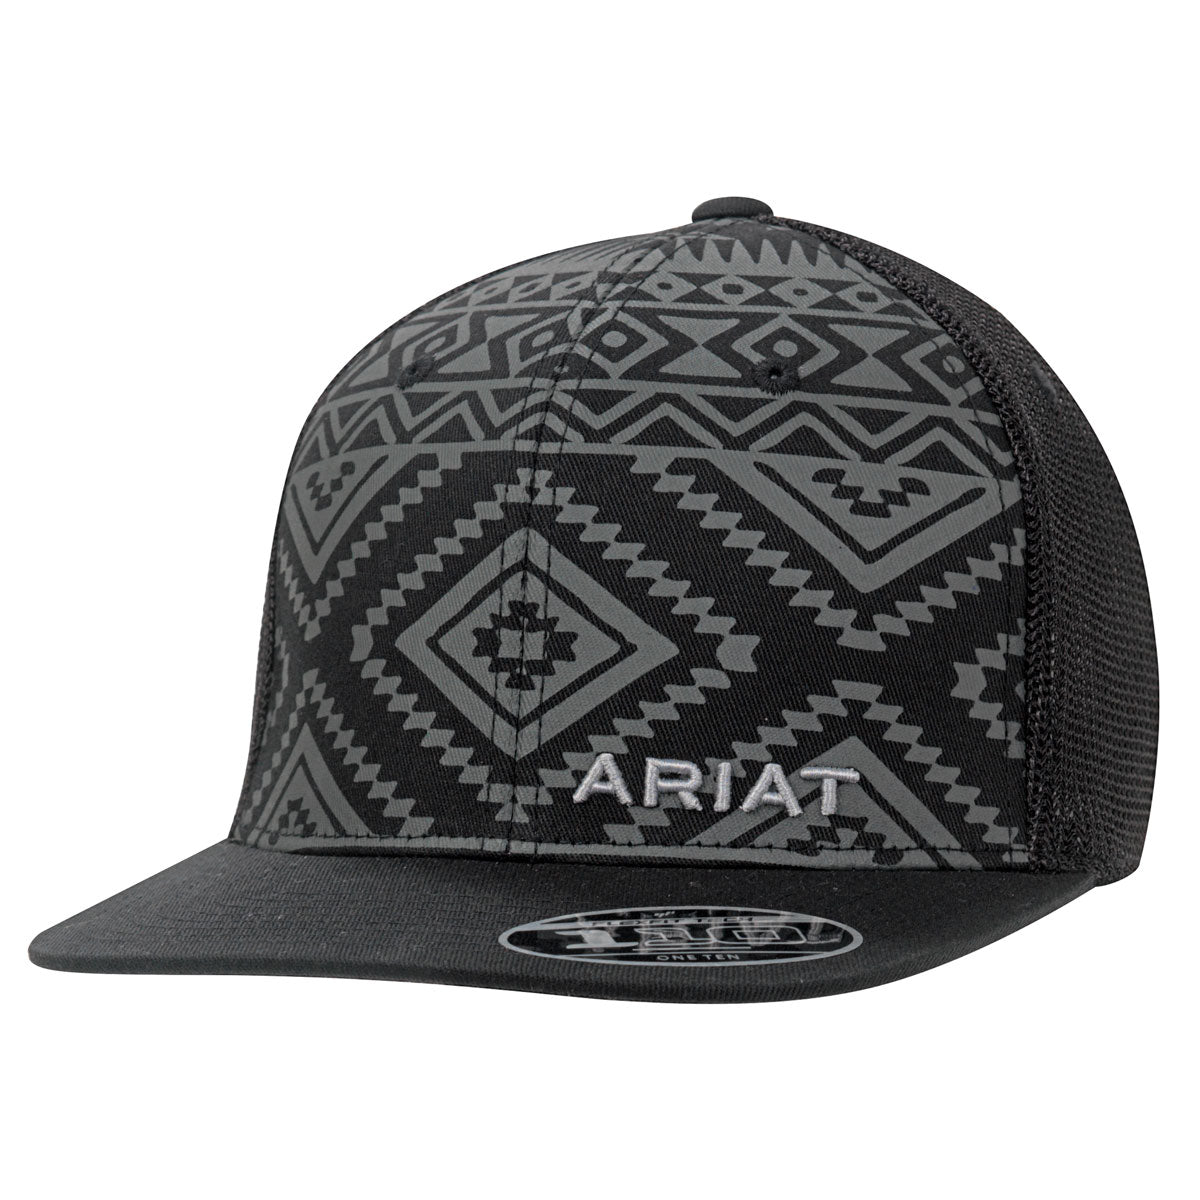 Ariat Men's Flexfit 110 Cap - Black/Grey Aztec